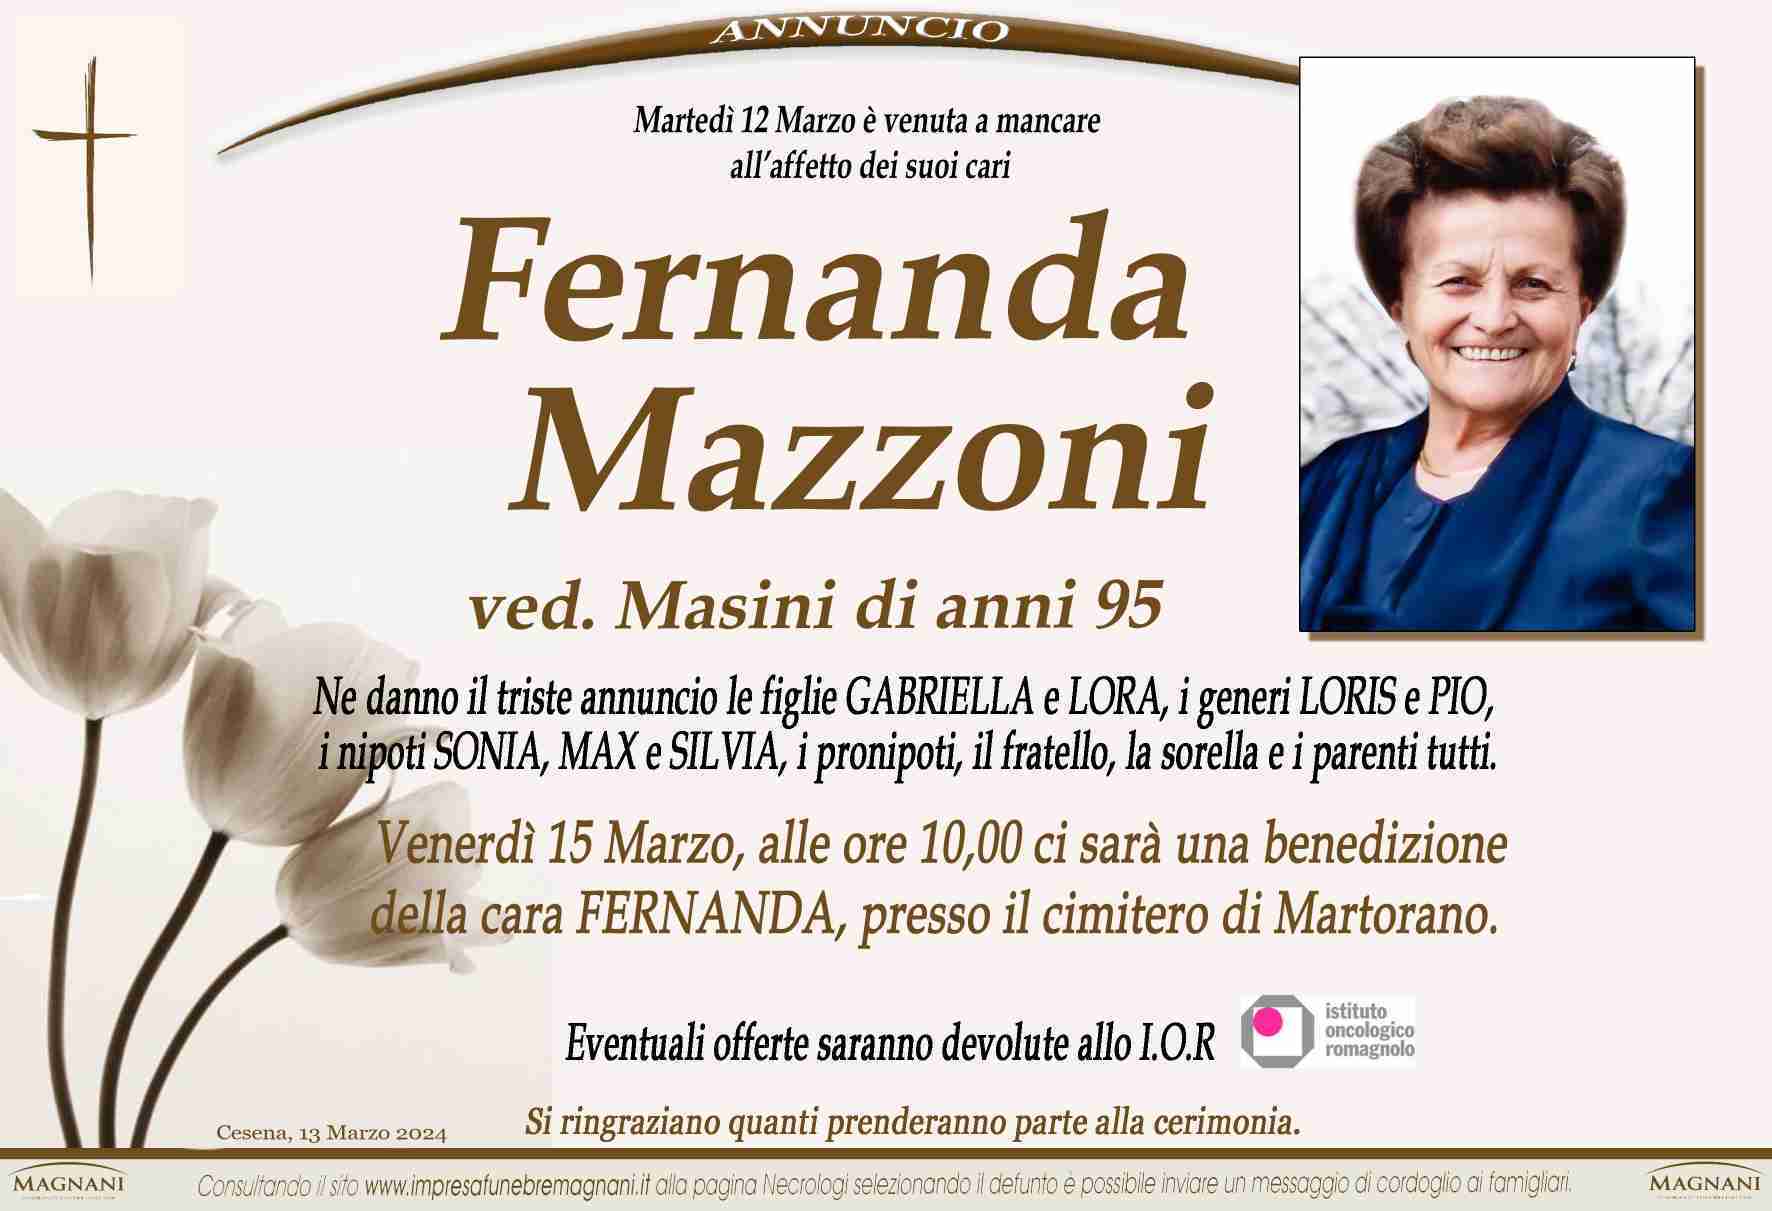 Fernanda Mazzoni